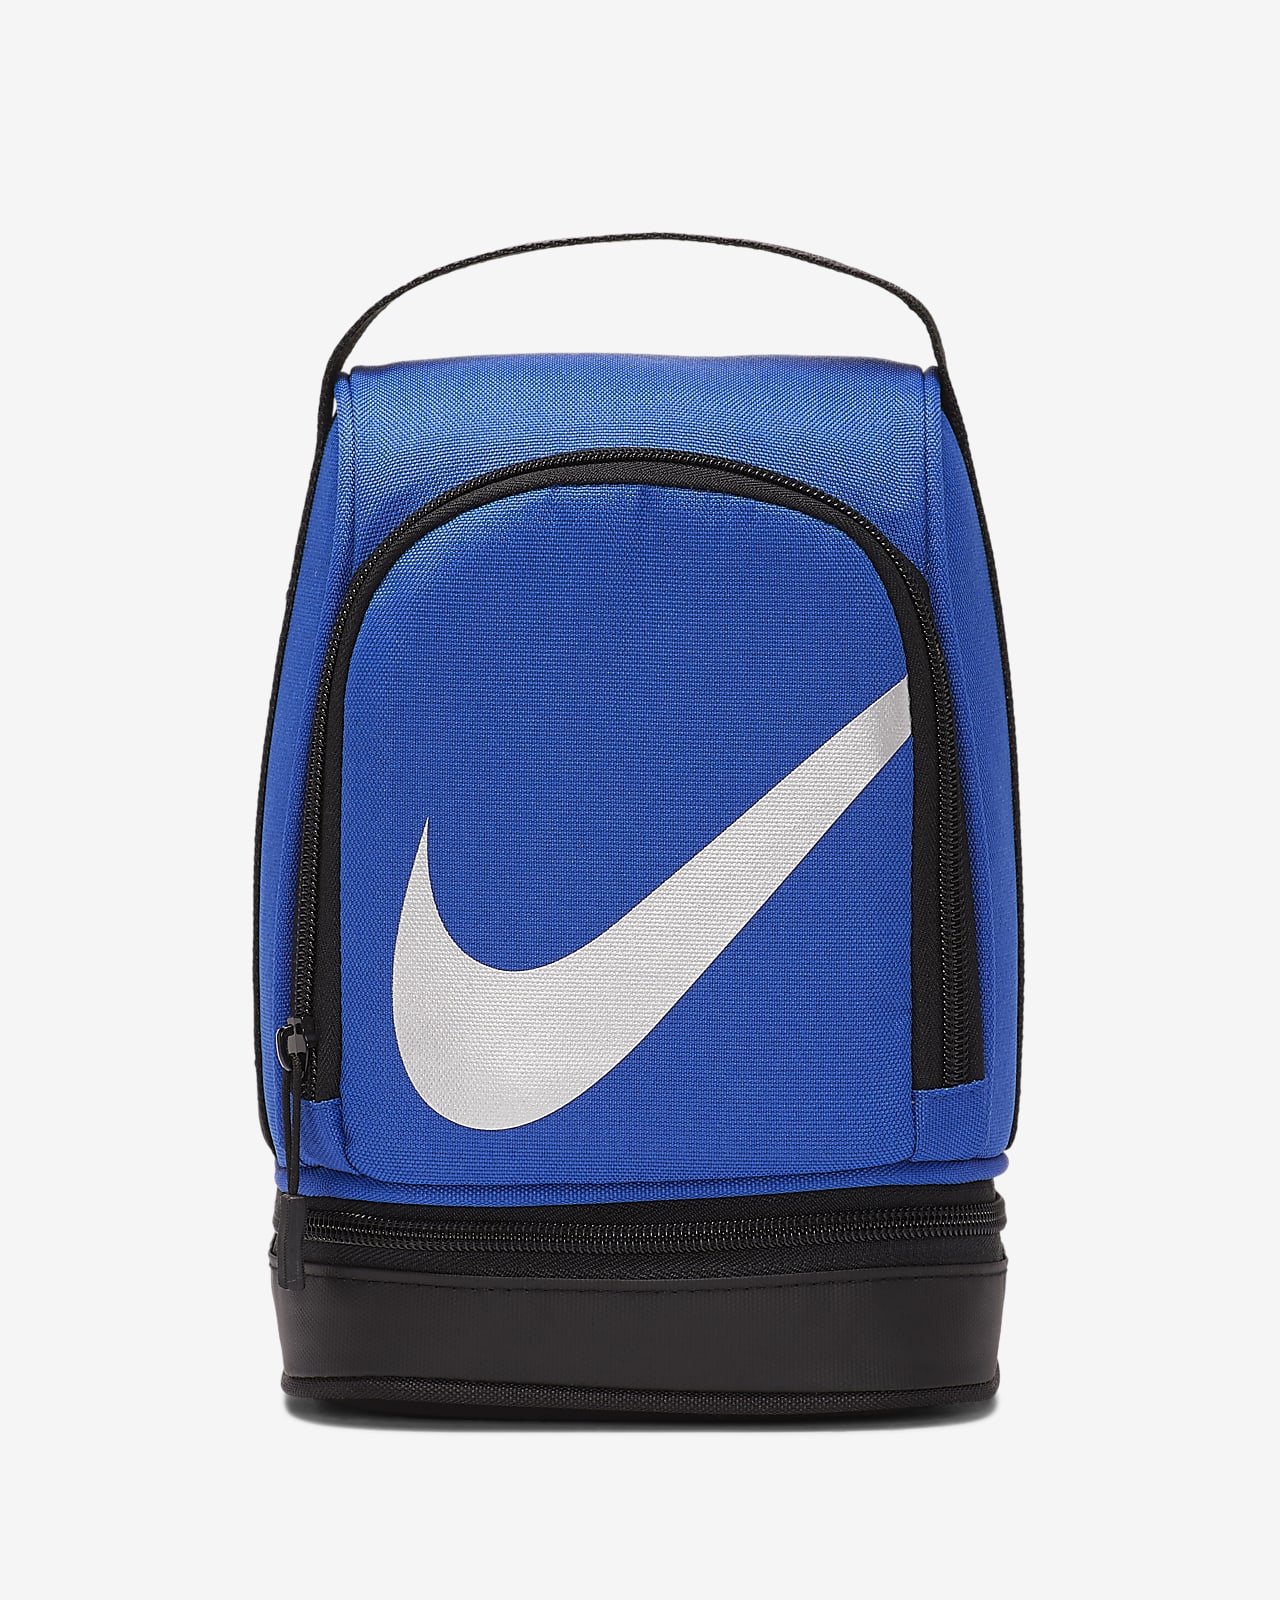 Nike Fuel Pack 2.0 Kids' Lunch Bag. Nike GB